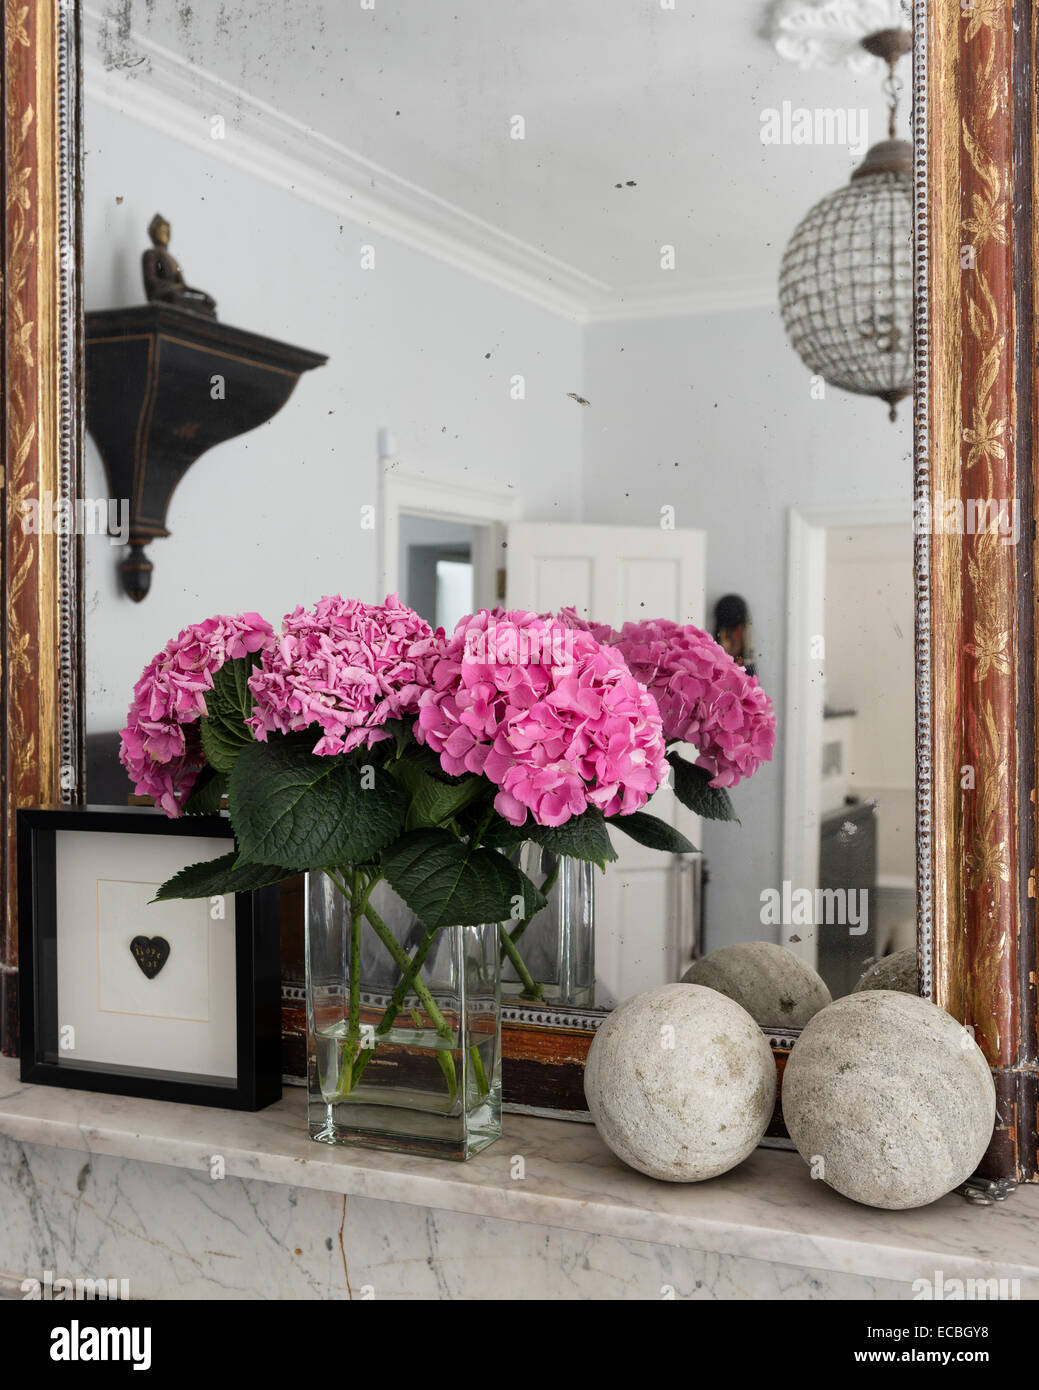 Hortensias en florero fotografías e imágenes de alta resolución - Alamy